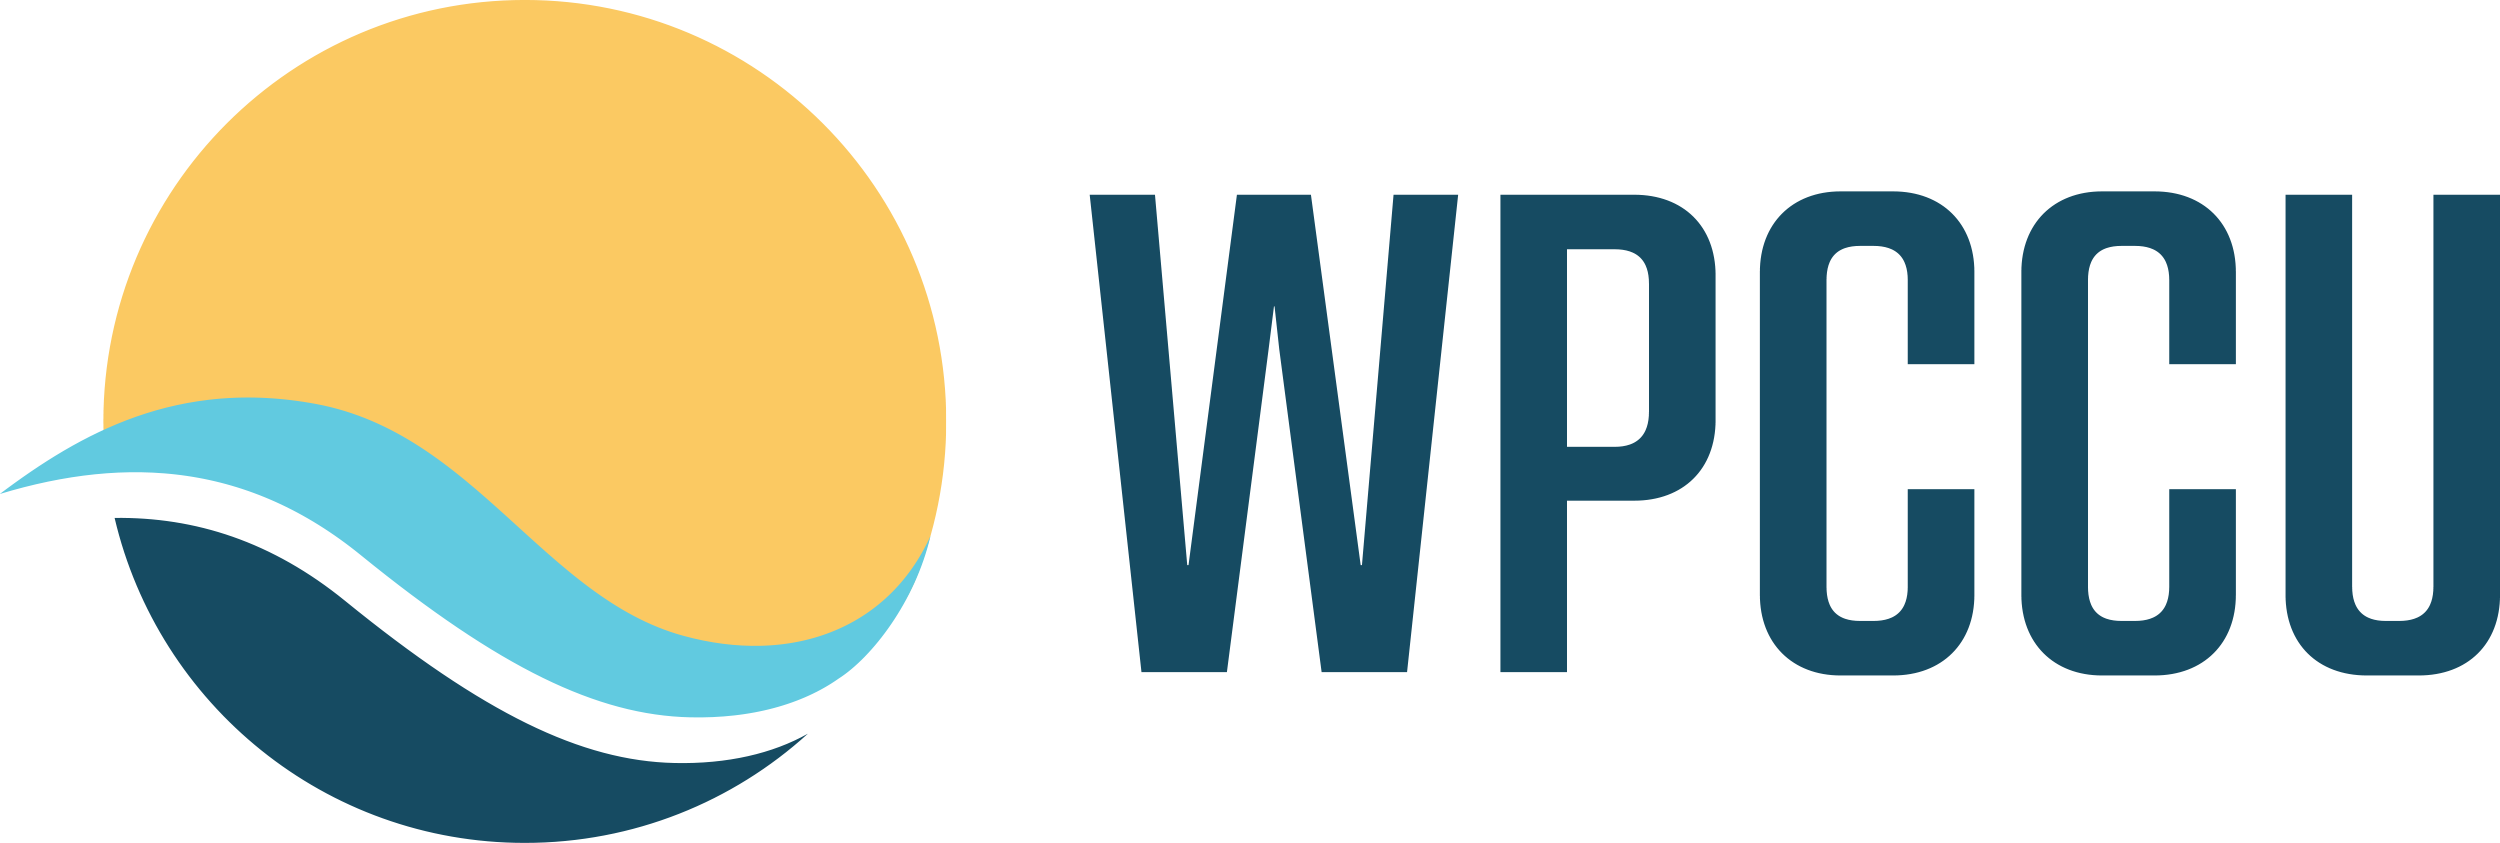 WPCCU logo